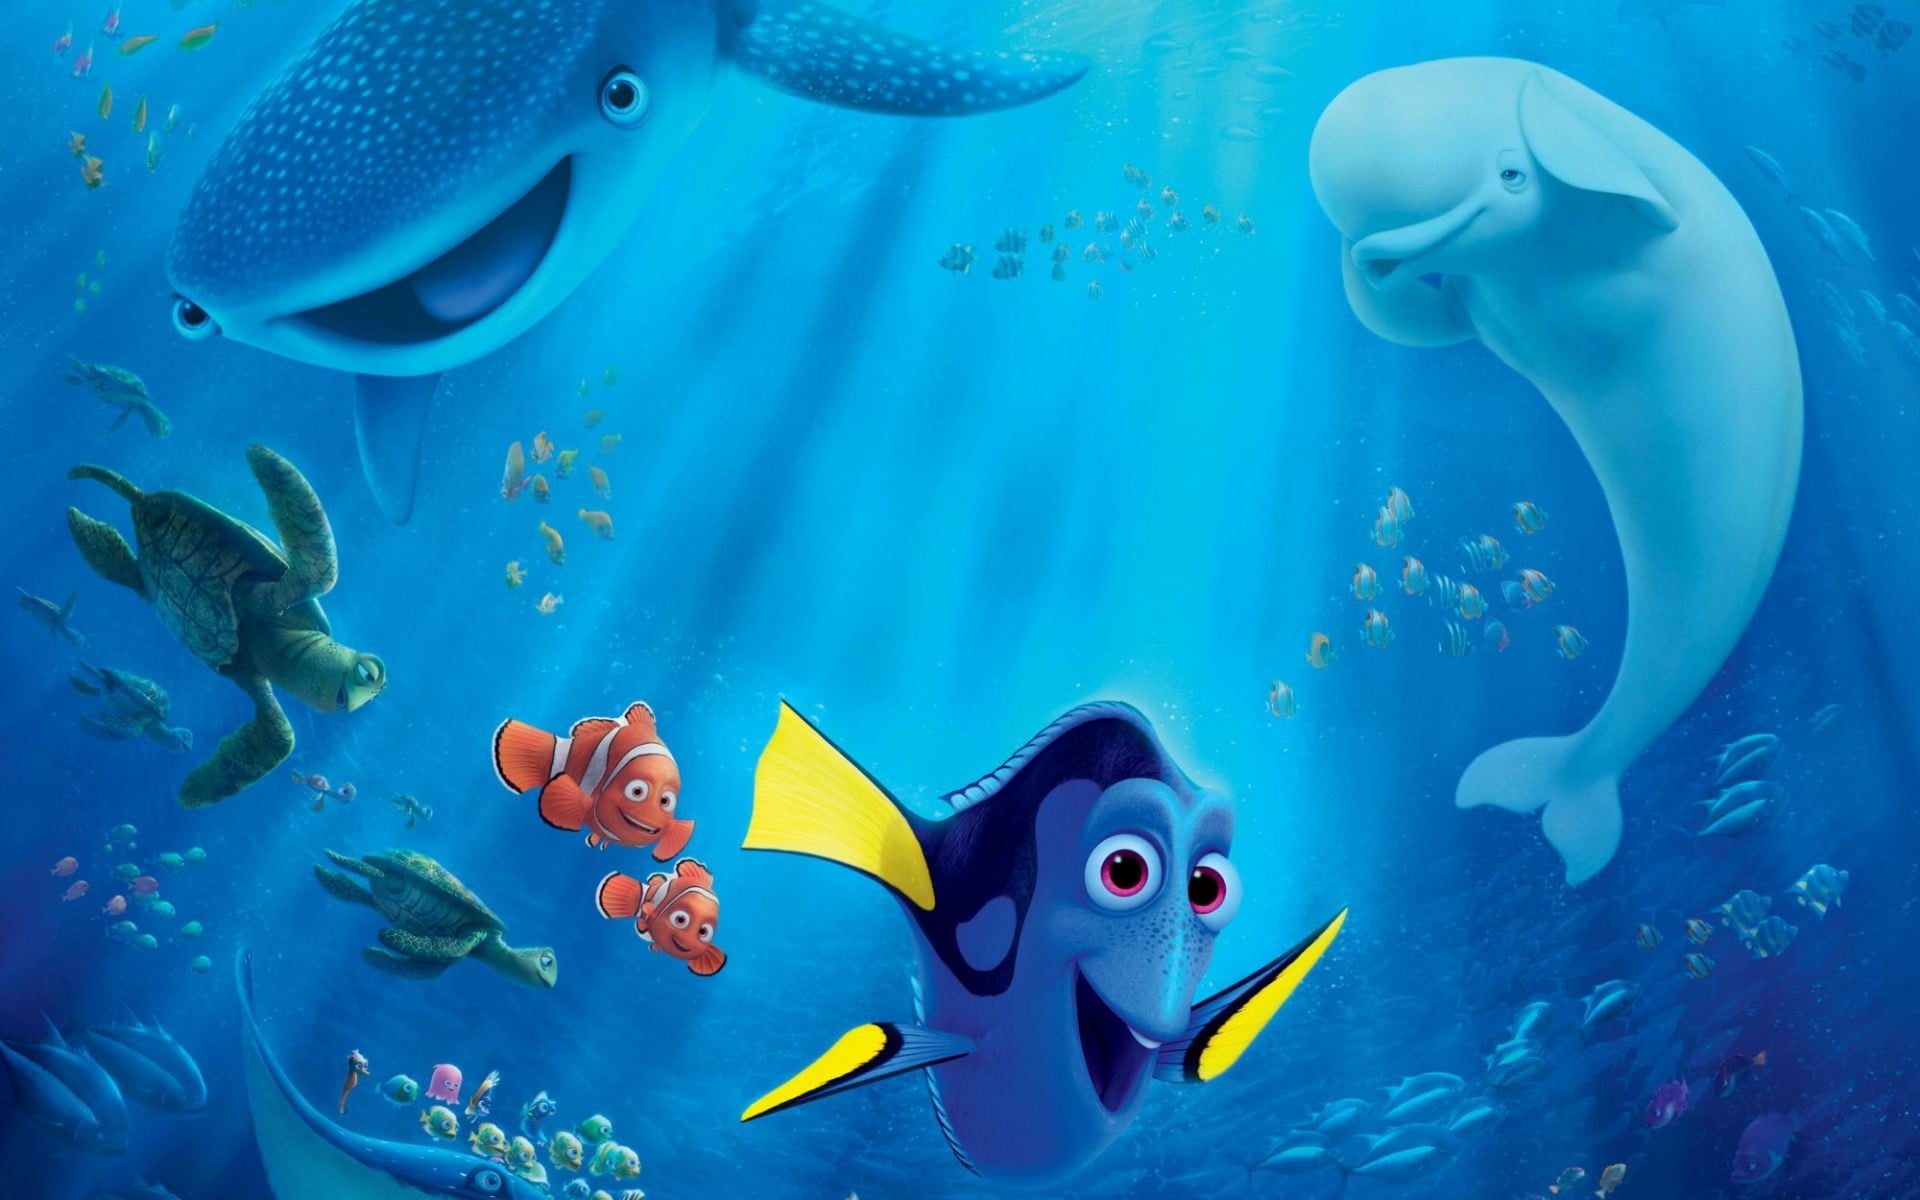 Finding Nemo wallpaper, Finding Dory, Pixar Animation Studios, Disney Pixar, movies